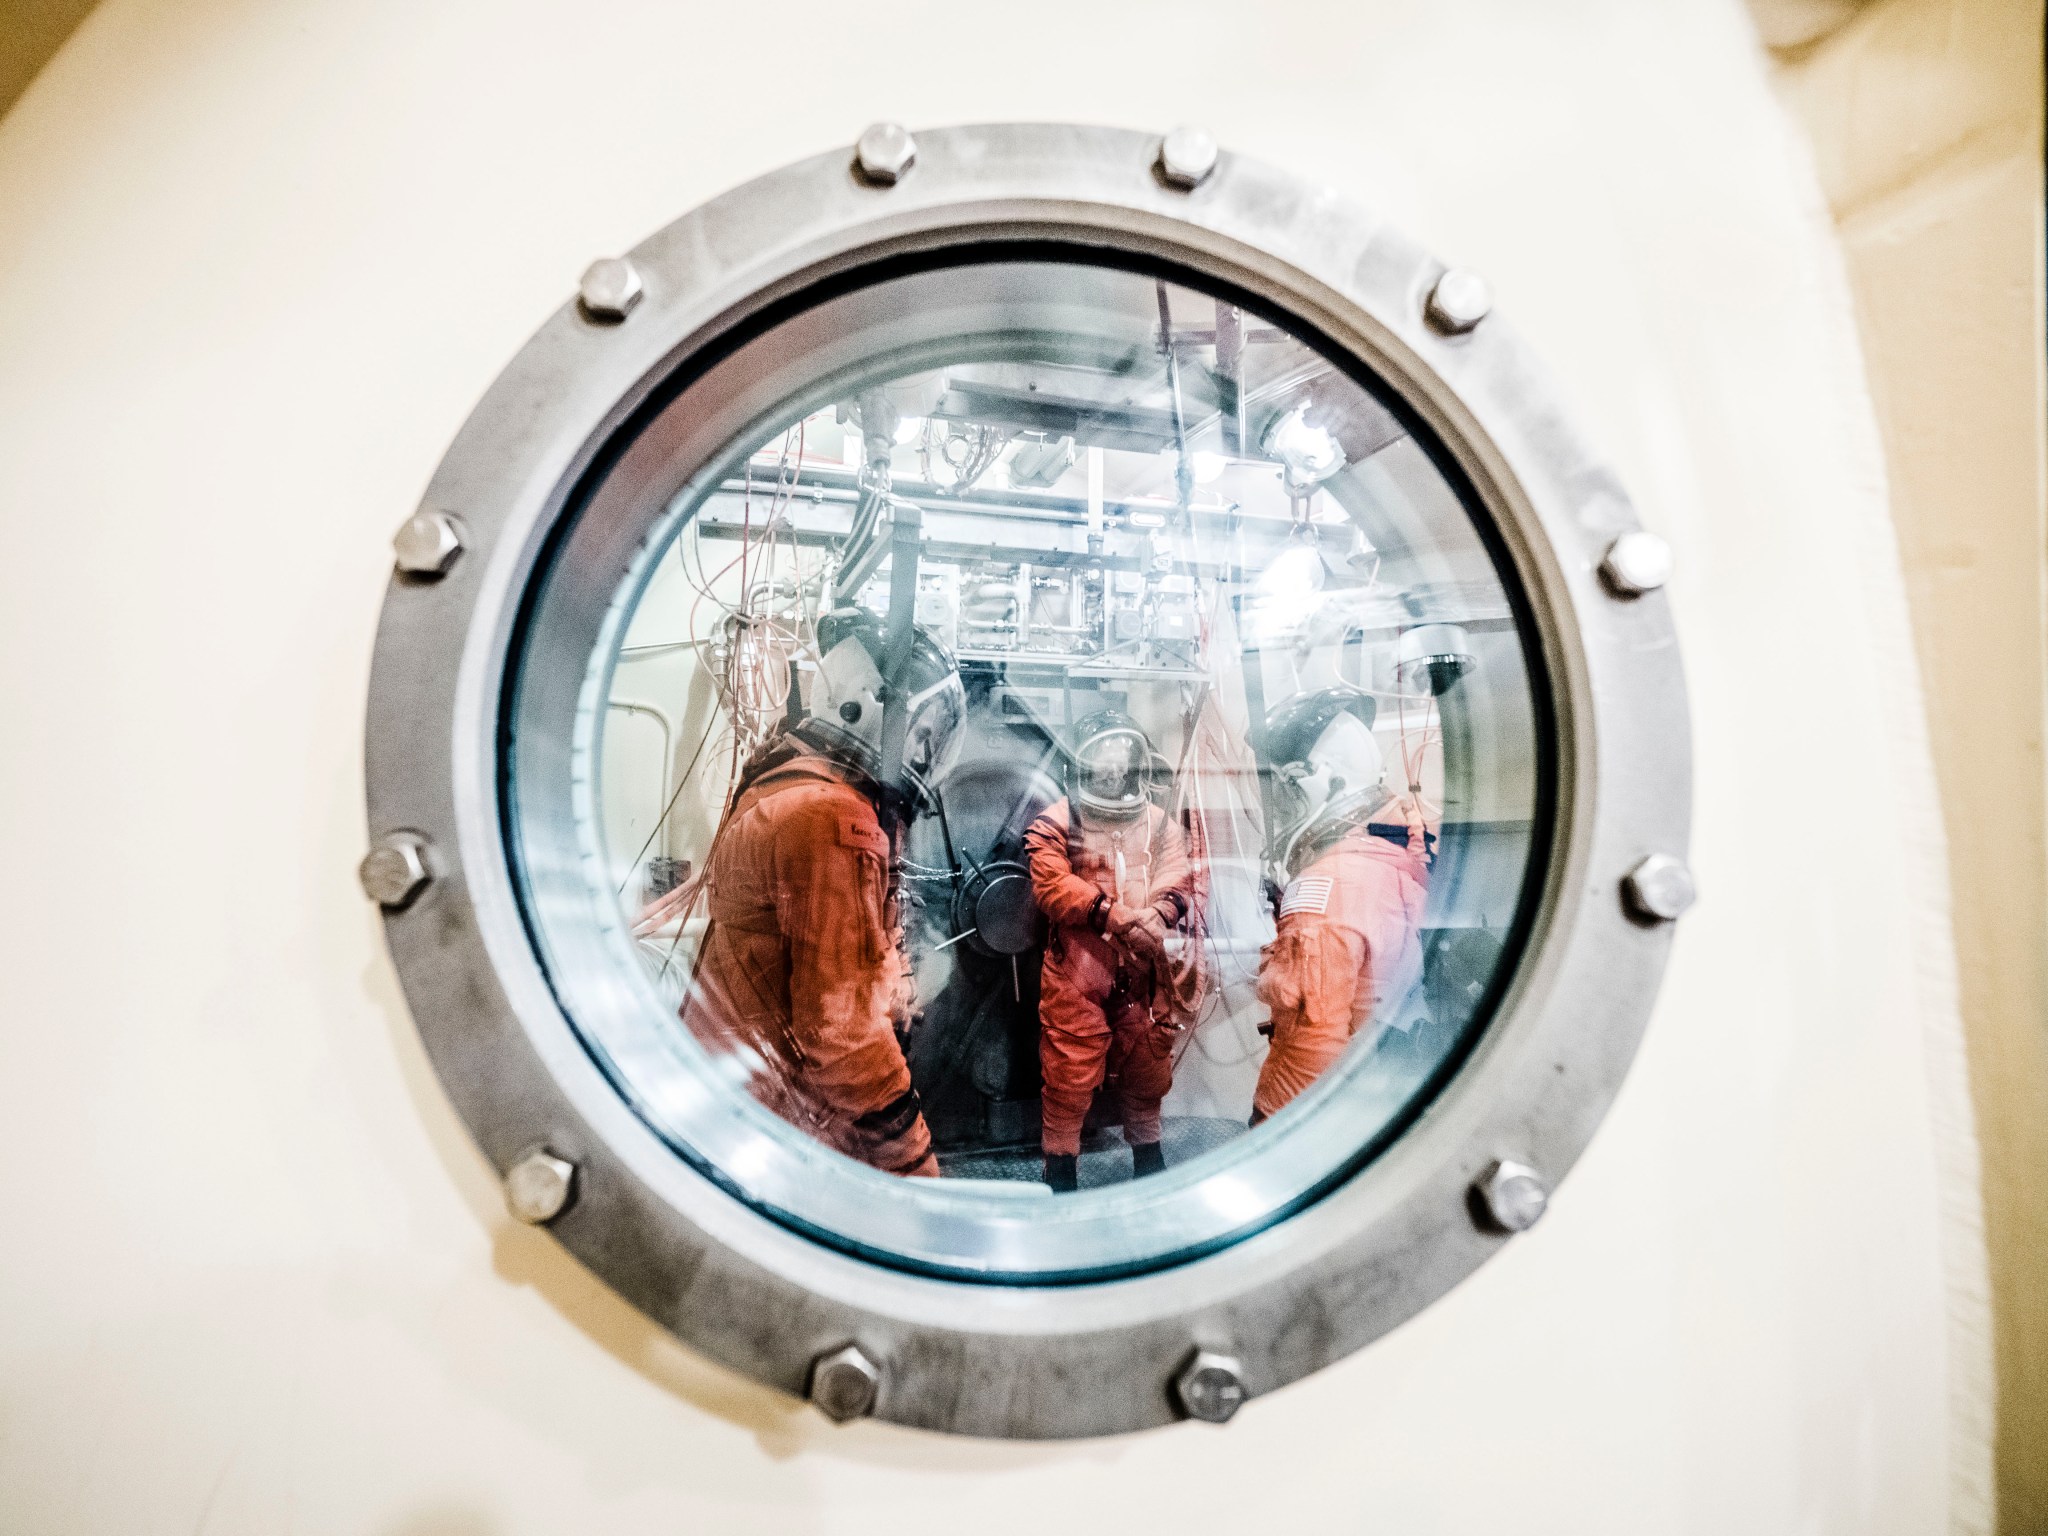 Technicians in pressure suits viewed through round window